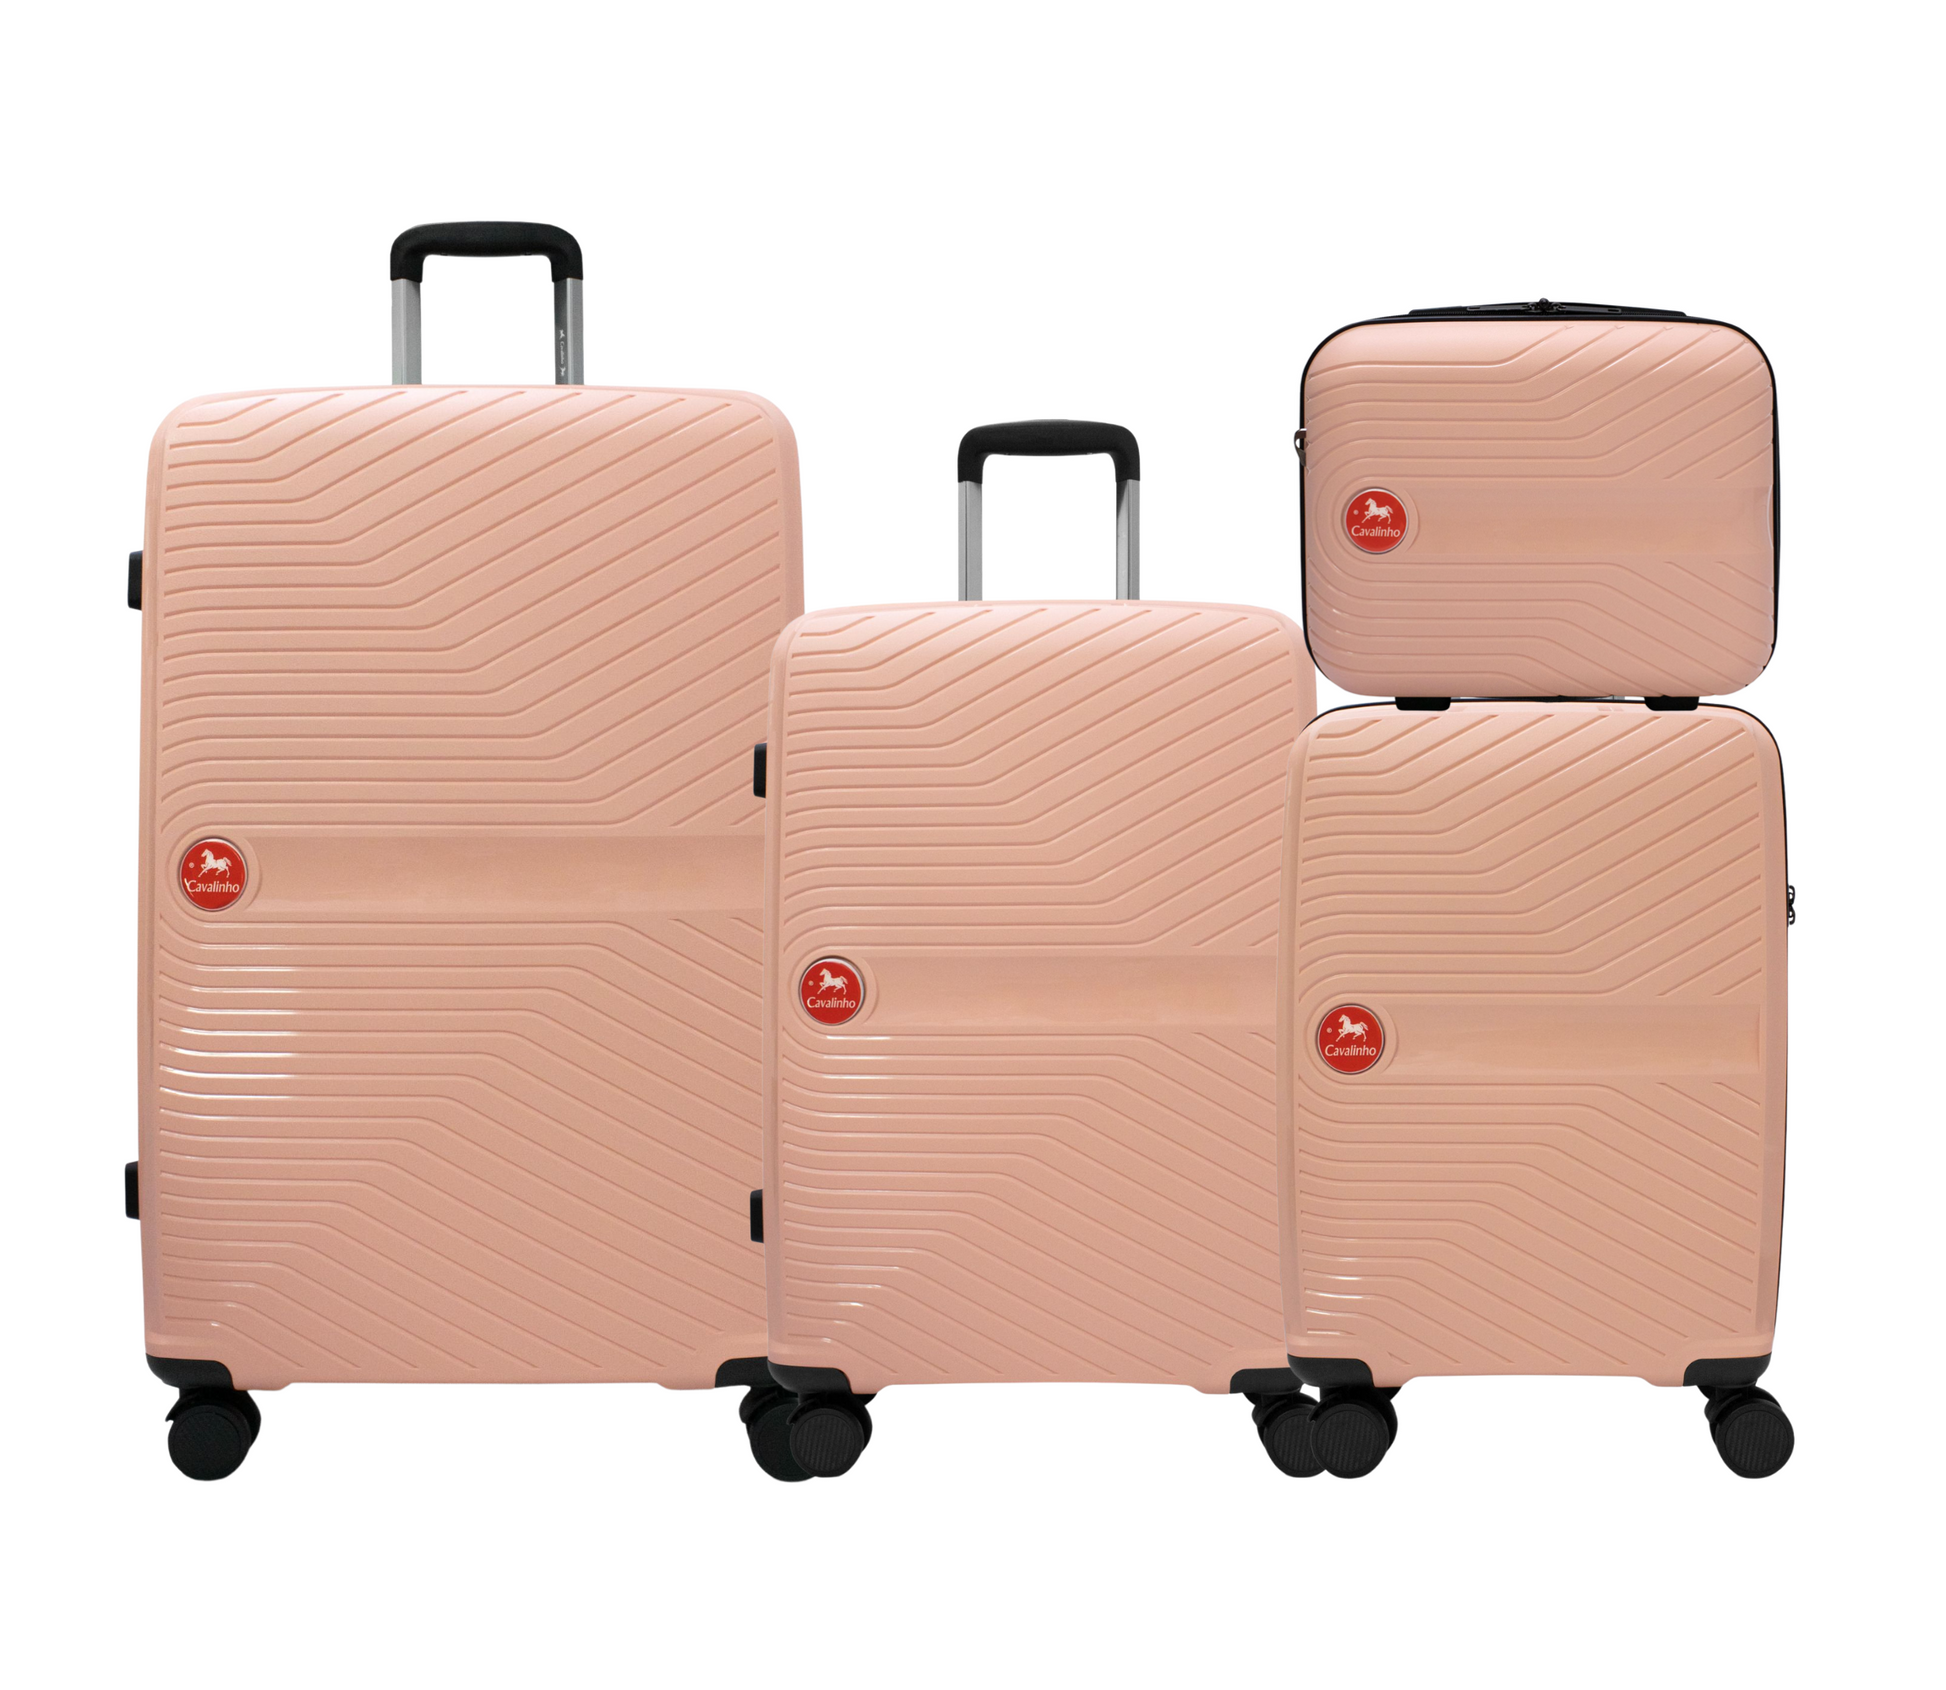 Cavalinho Canada & USA 4 Piece Set of Colorful Hardside Luggage (15", 19", 24", 28") - Salmon - 68020004.11.S4_1